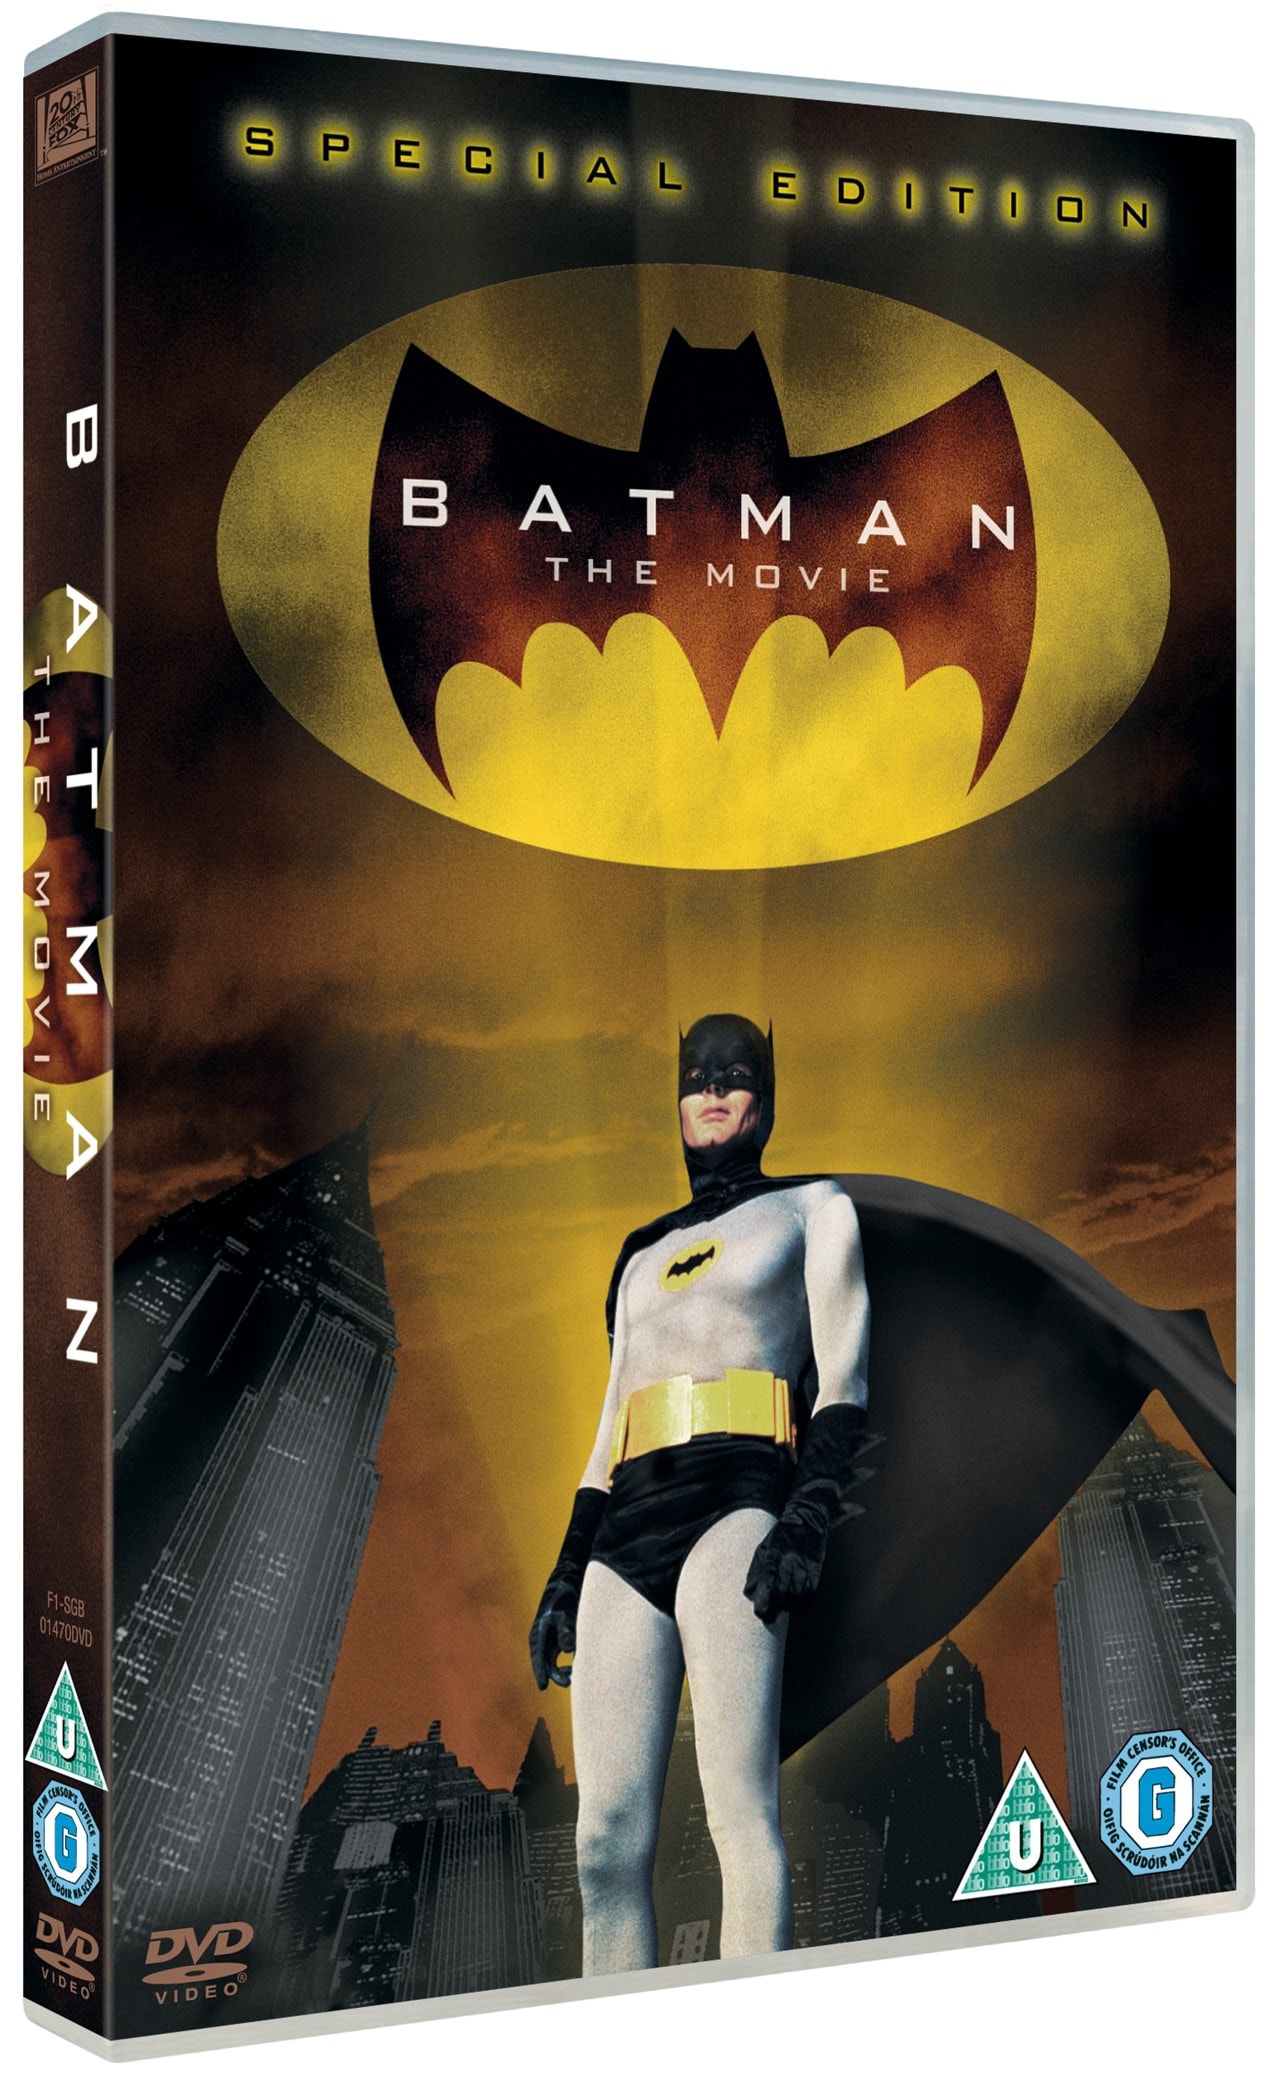 Batman The Movie Dvd Free Shipping Over Hmv Store